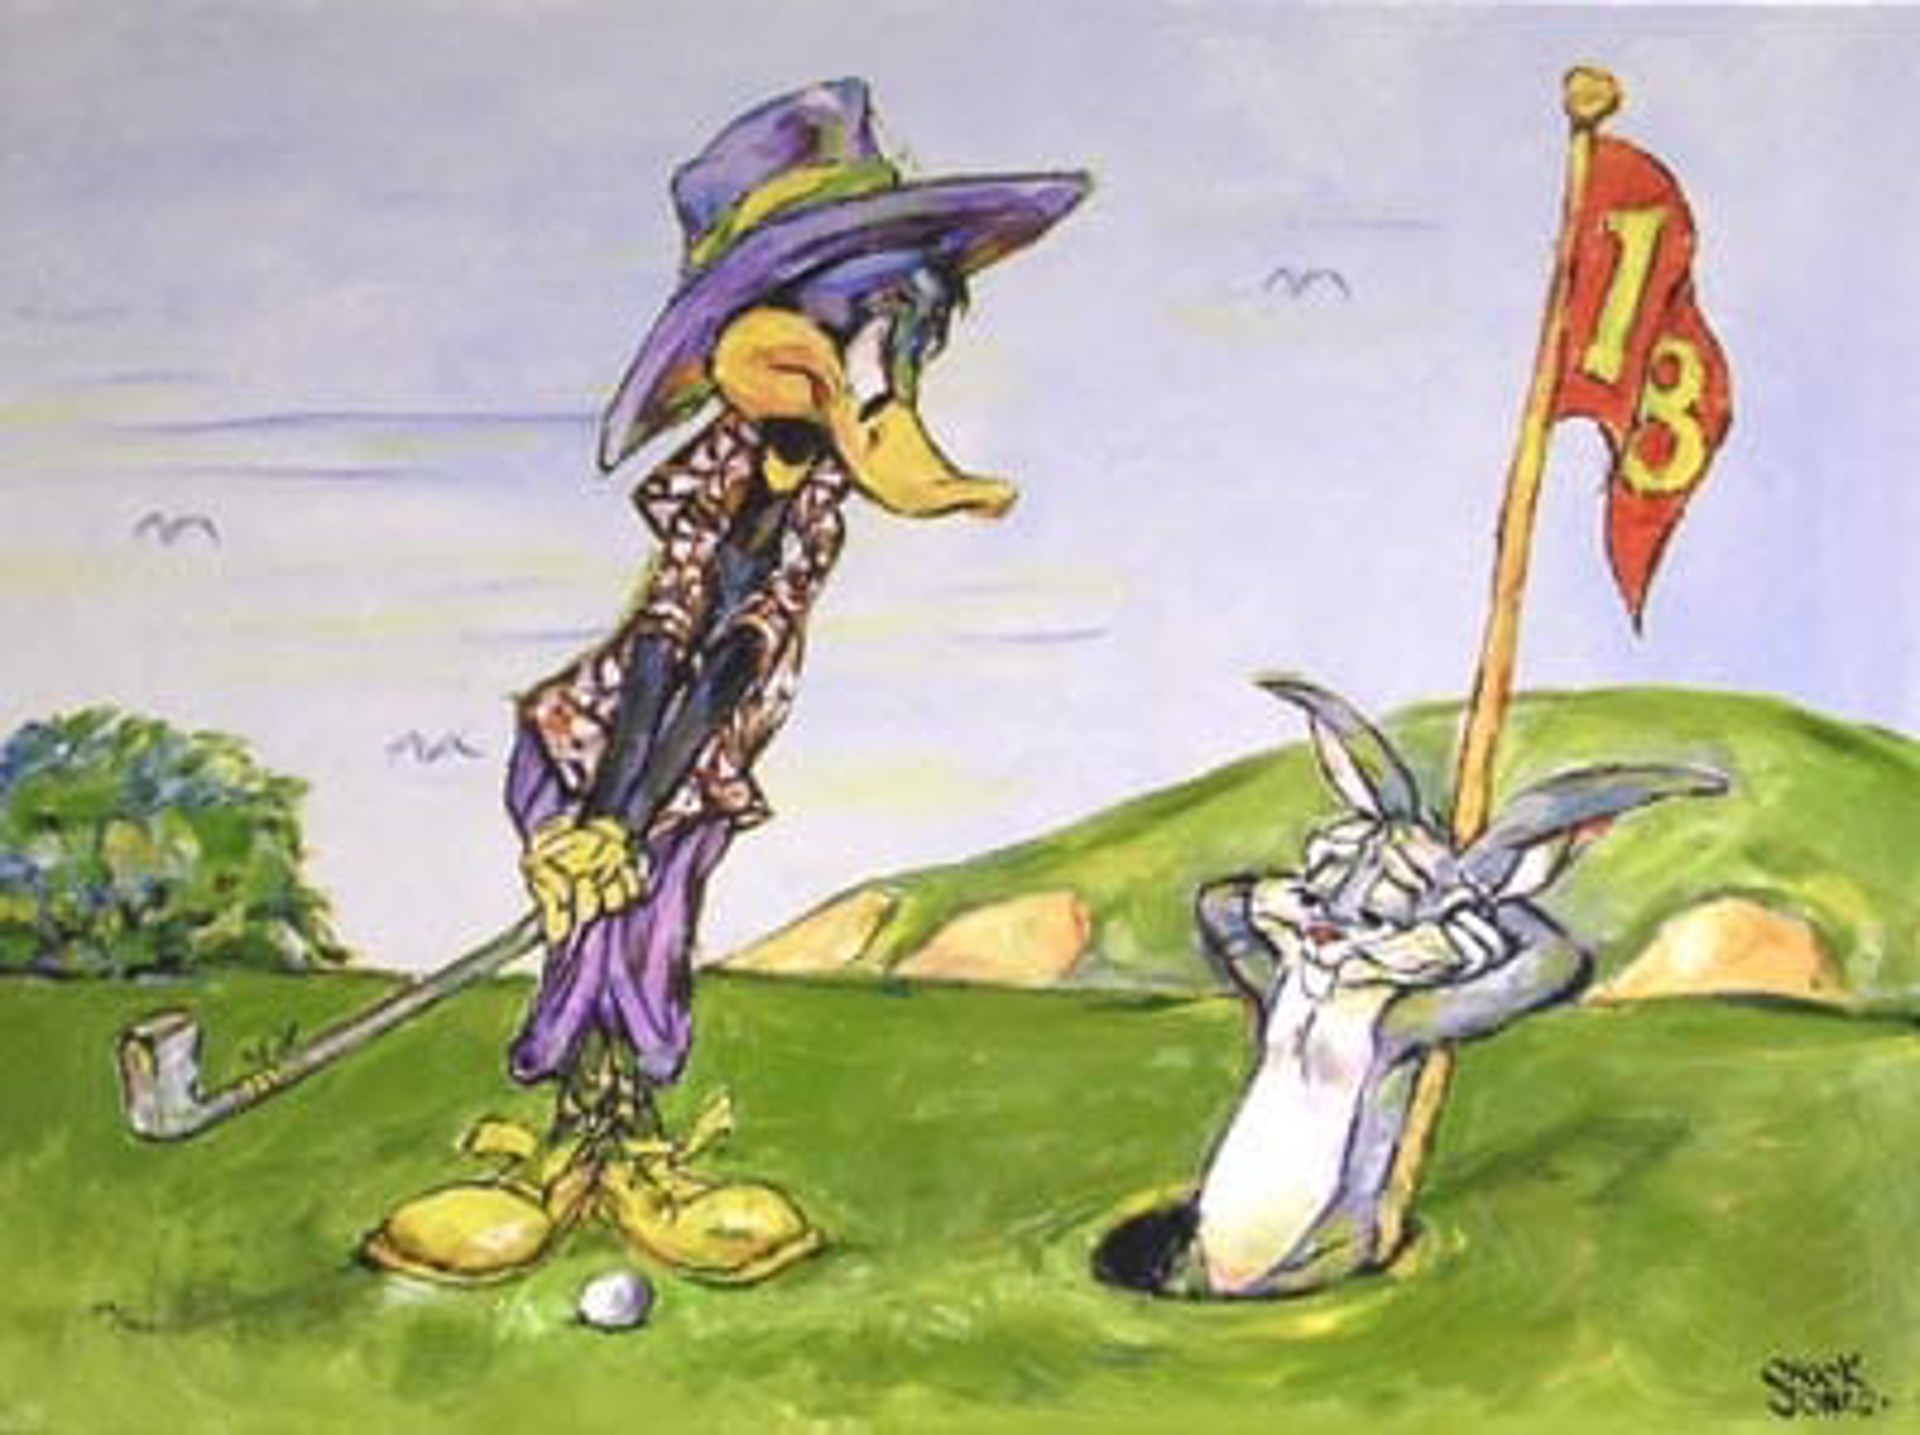 Hare Hazard by Chuck Jones